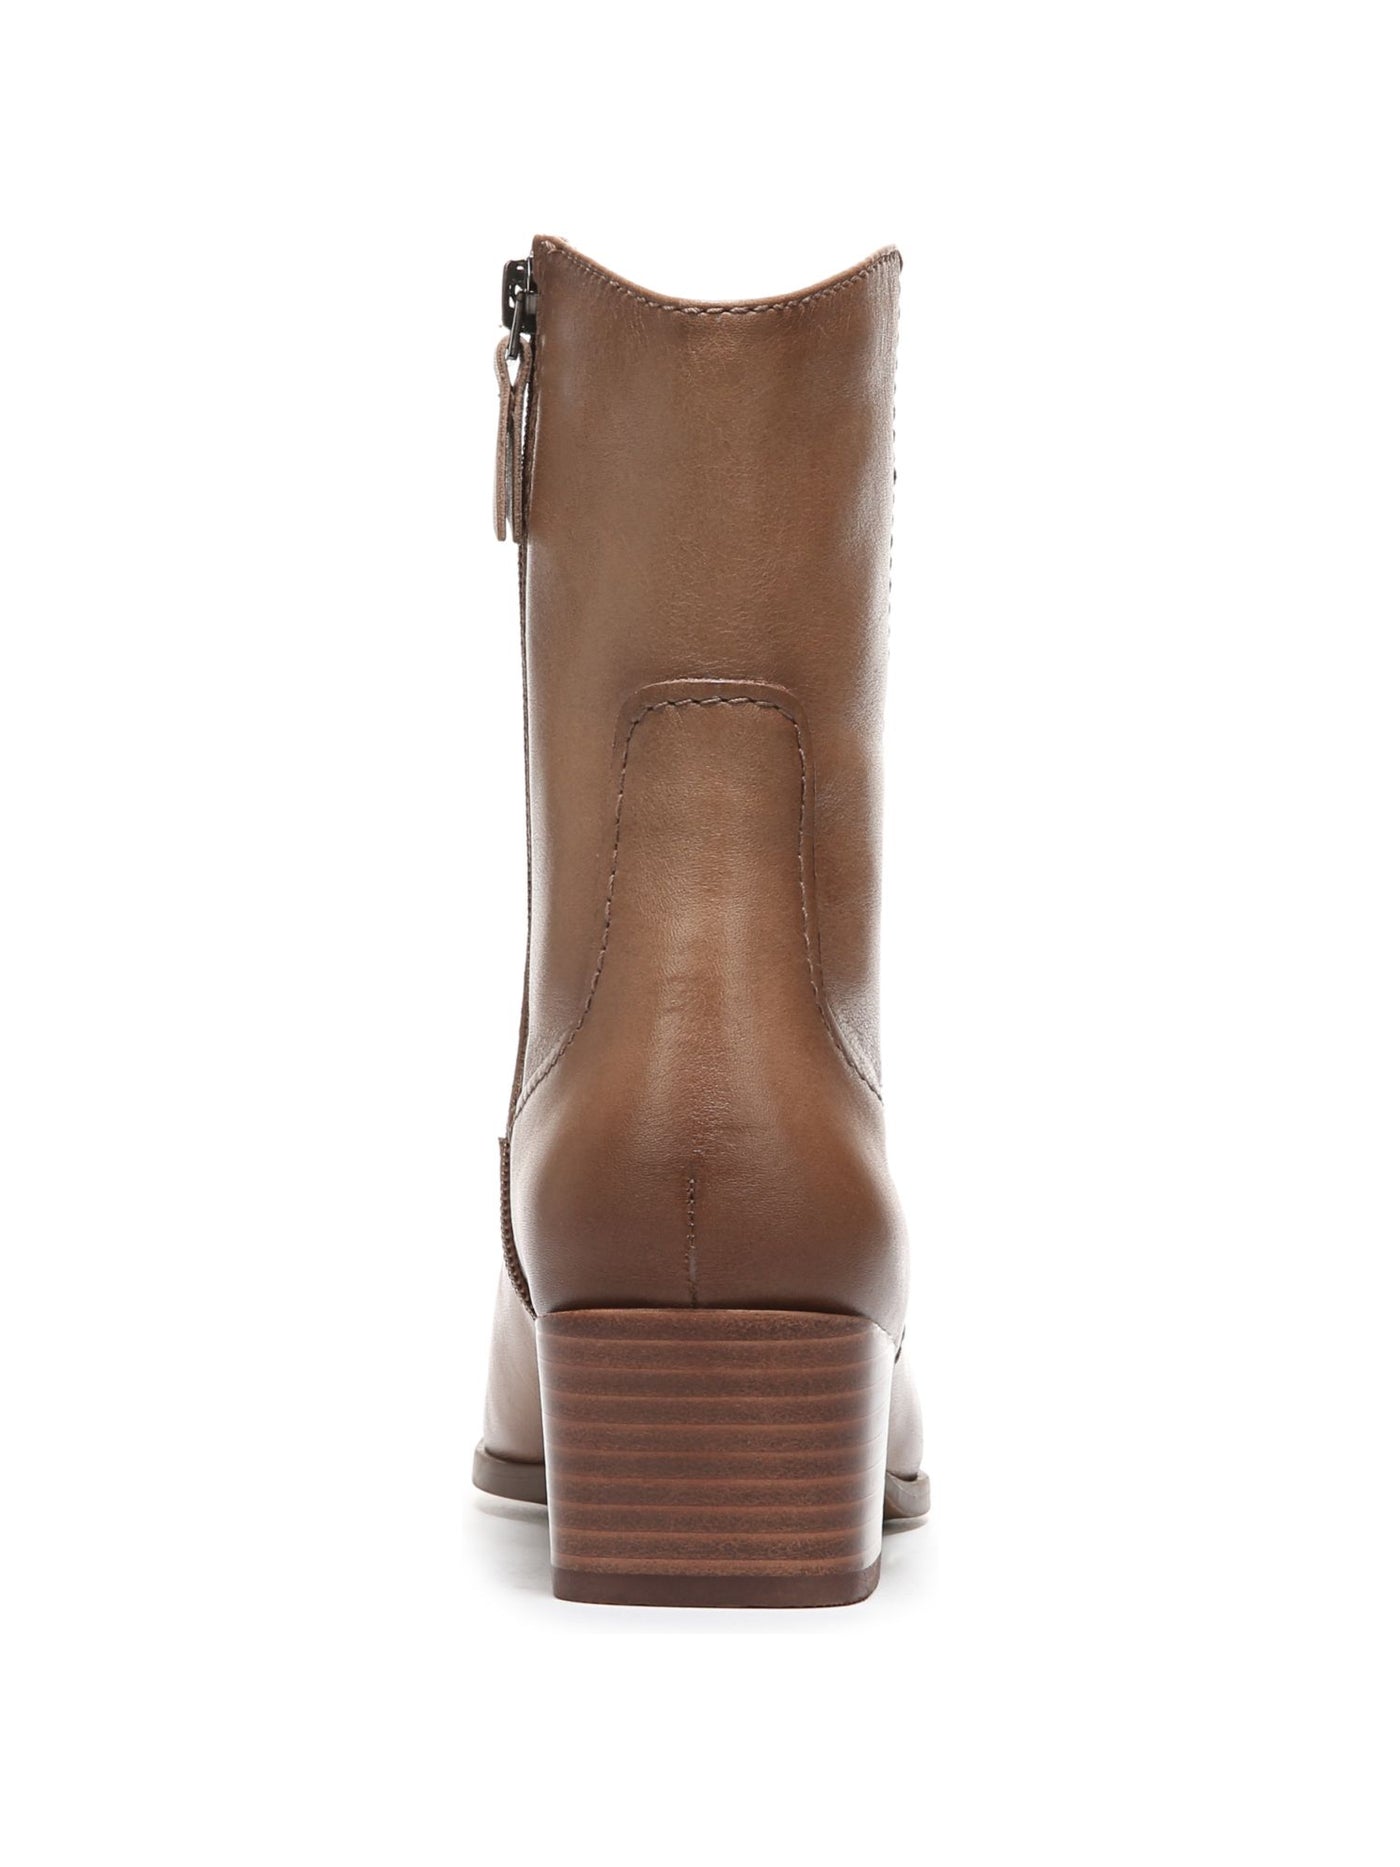 NATURALIZER Womens Beige Padded Gaby Almond Toe Block Heel Zip-Up Leather Dress Western Boot 6.5 M